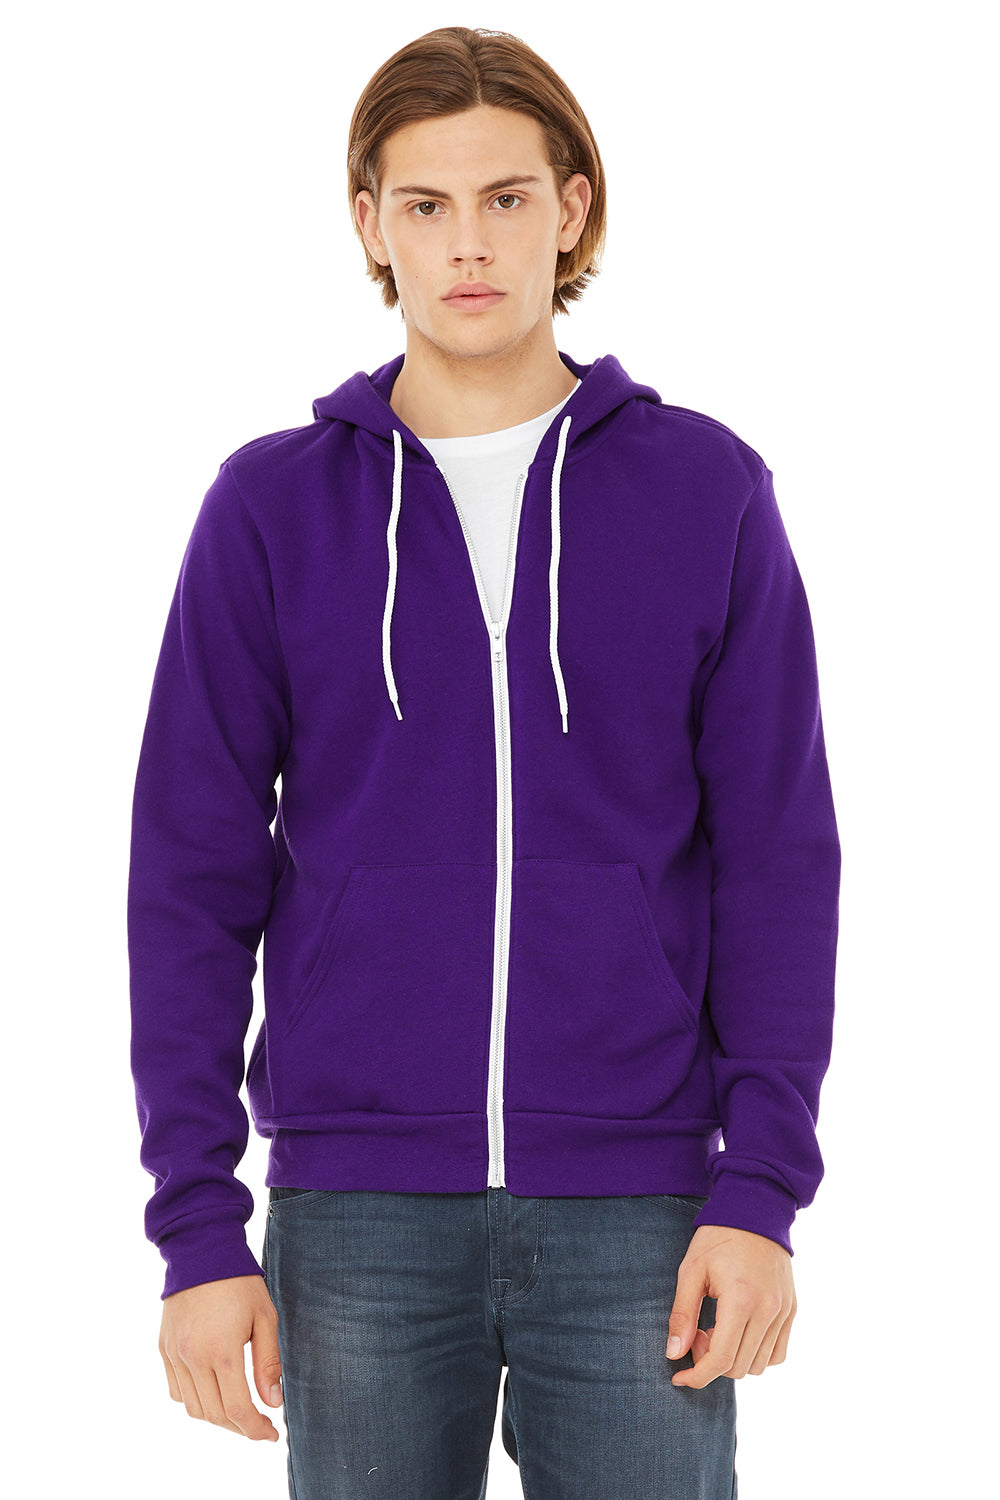 Bella + Canvas BC3739/3739 Mens Fleece Full Zip Hooded Sweatshirt Hoodie Team Purple Model Front